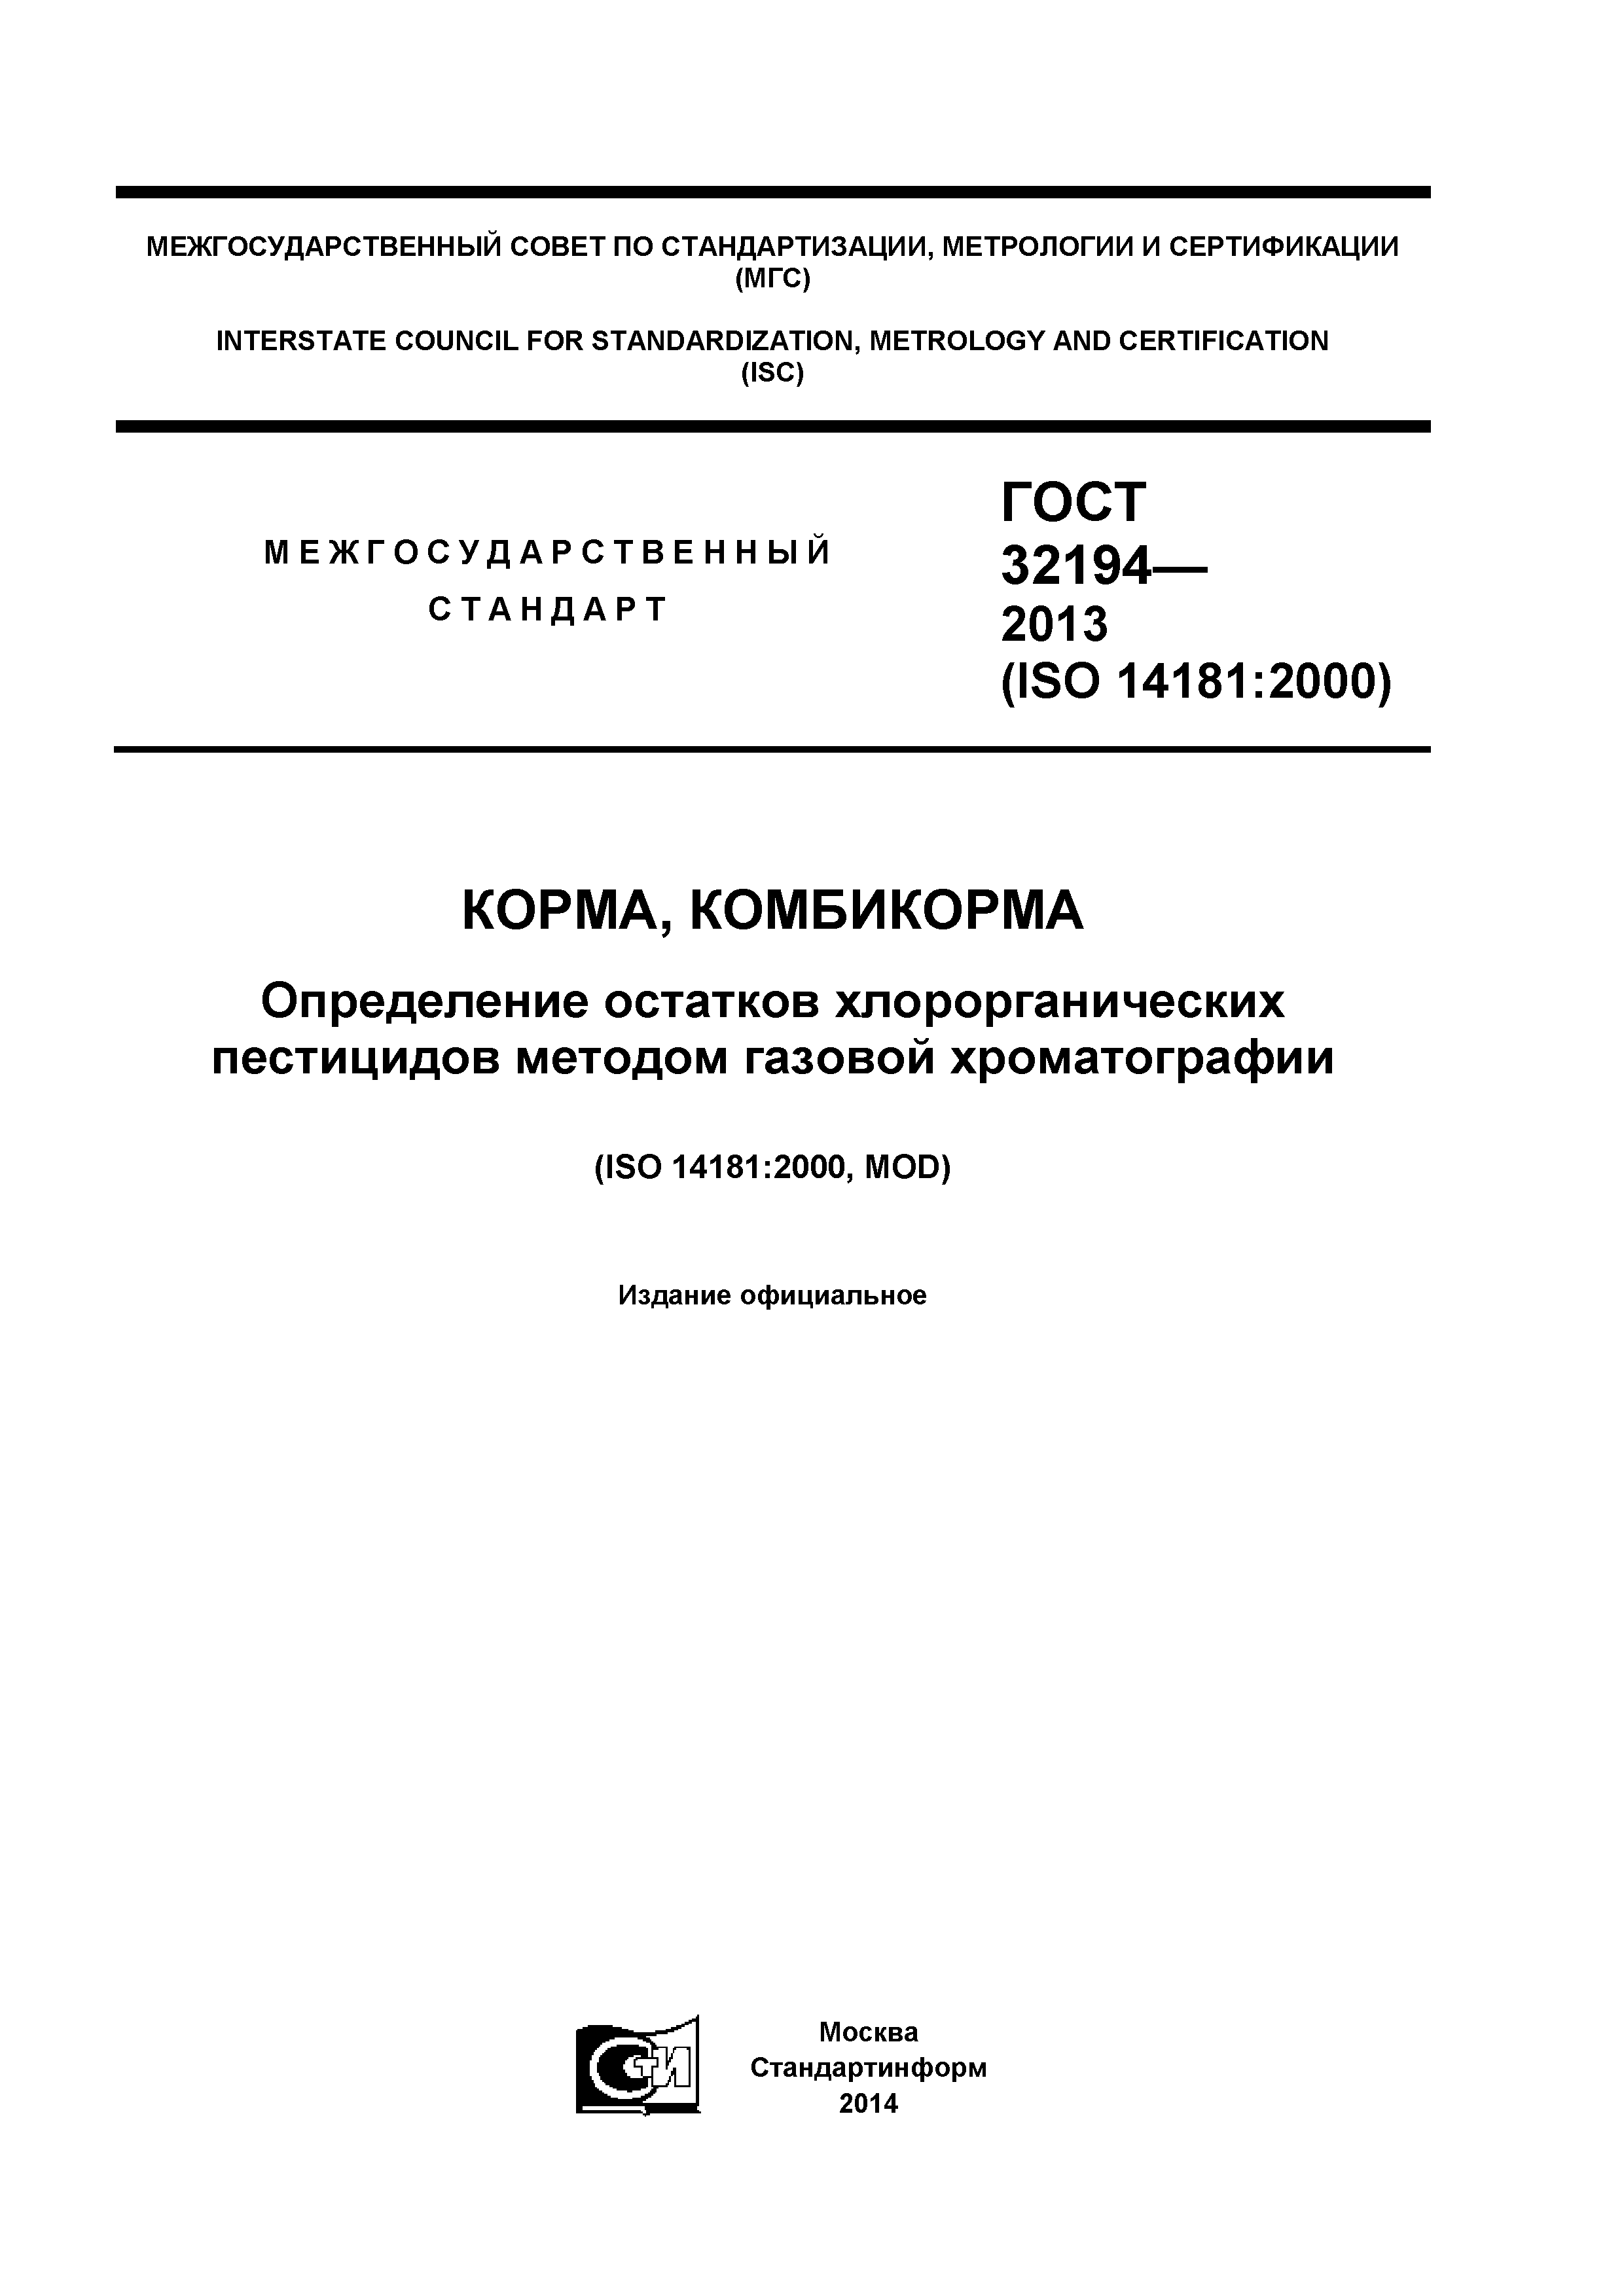 ГОСТ 32194-2013